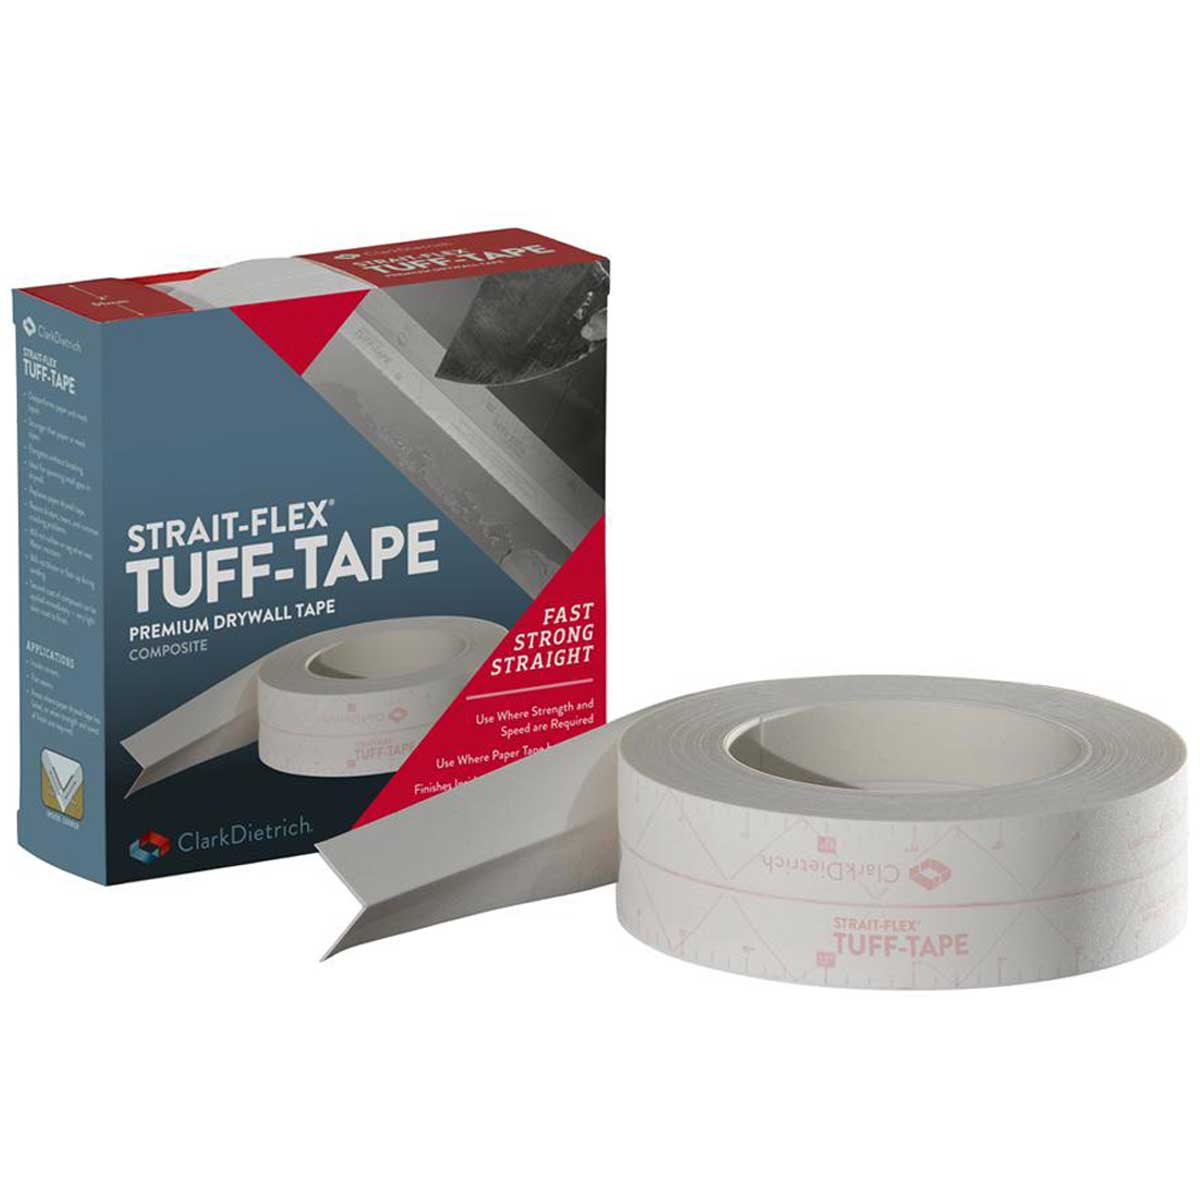 Tuff-tape/TAF-teip (corner reinforcing composite profile in roll